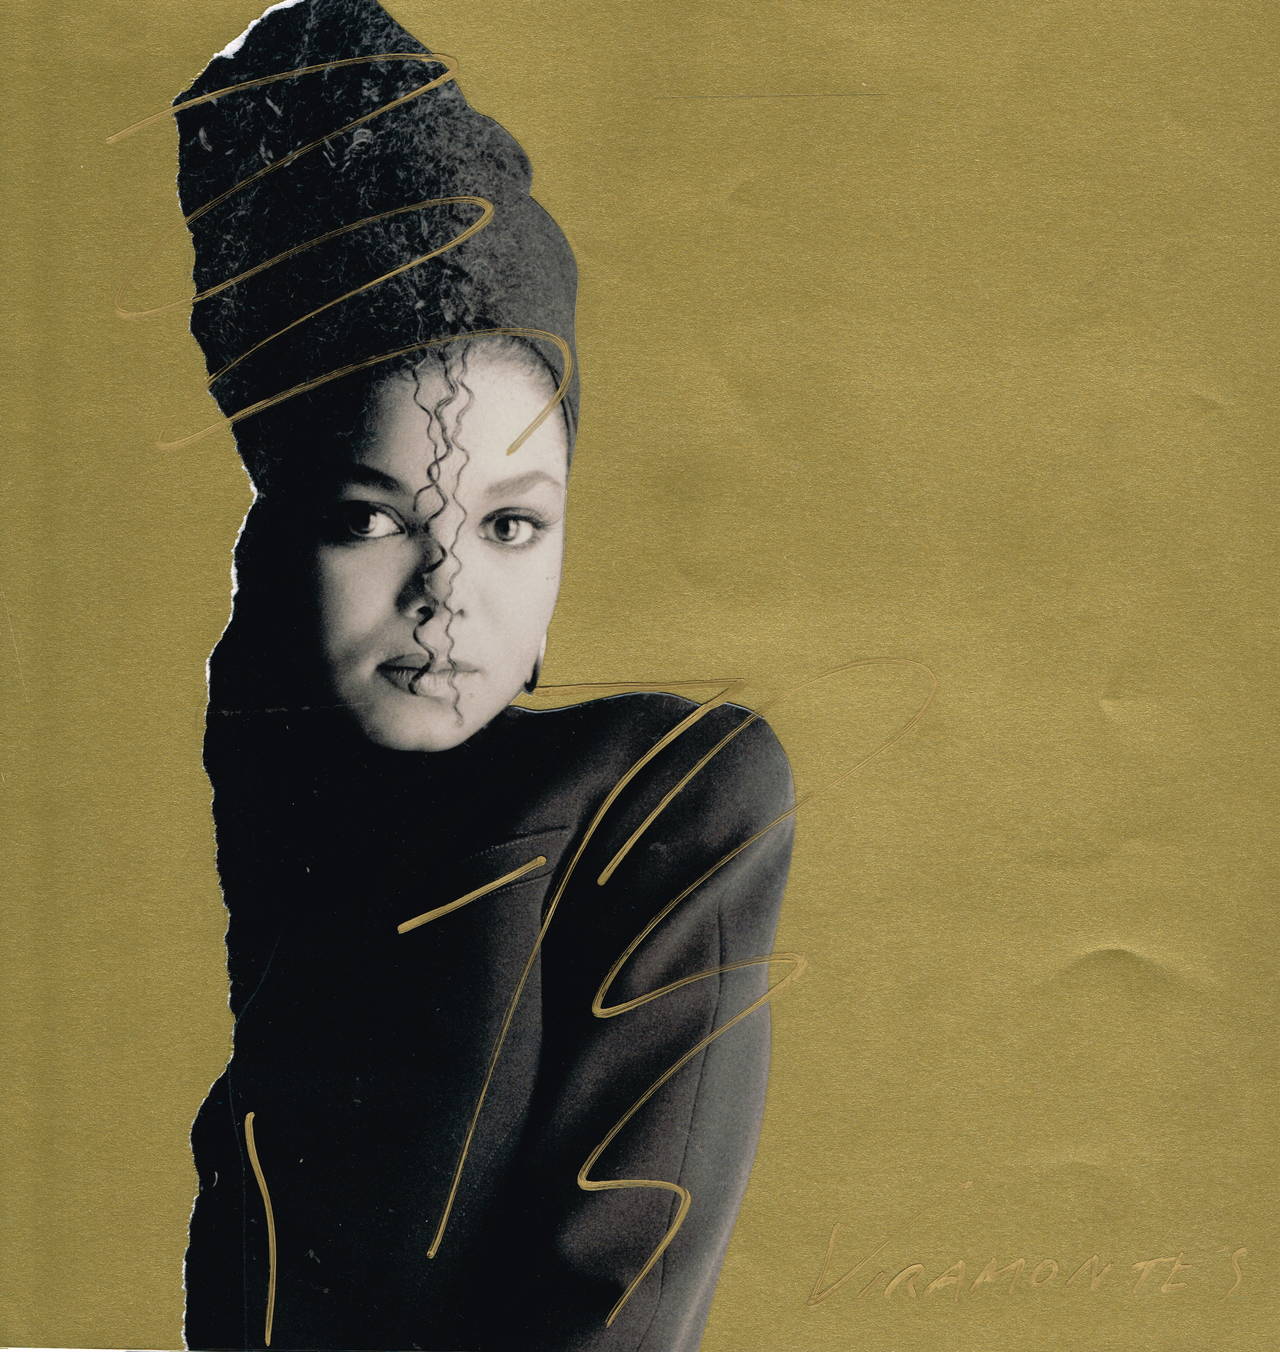 Janet Jackson Control Album Cover Art Work 1986 - Mixed Media Art by Tony Viramontes